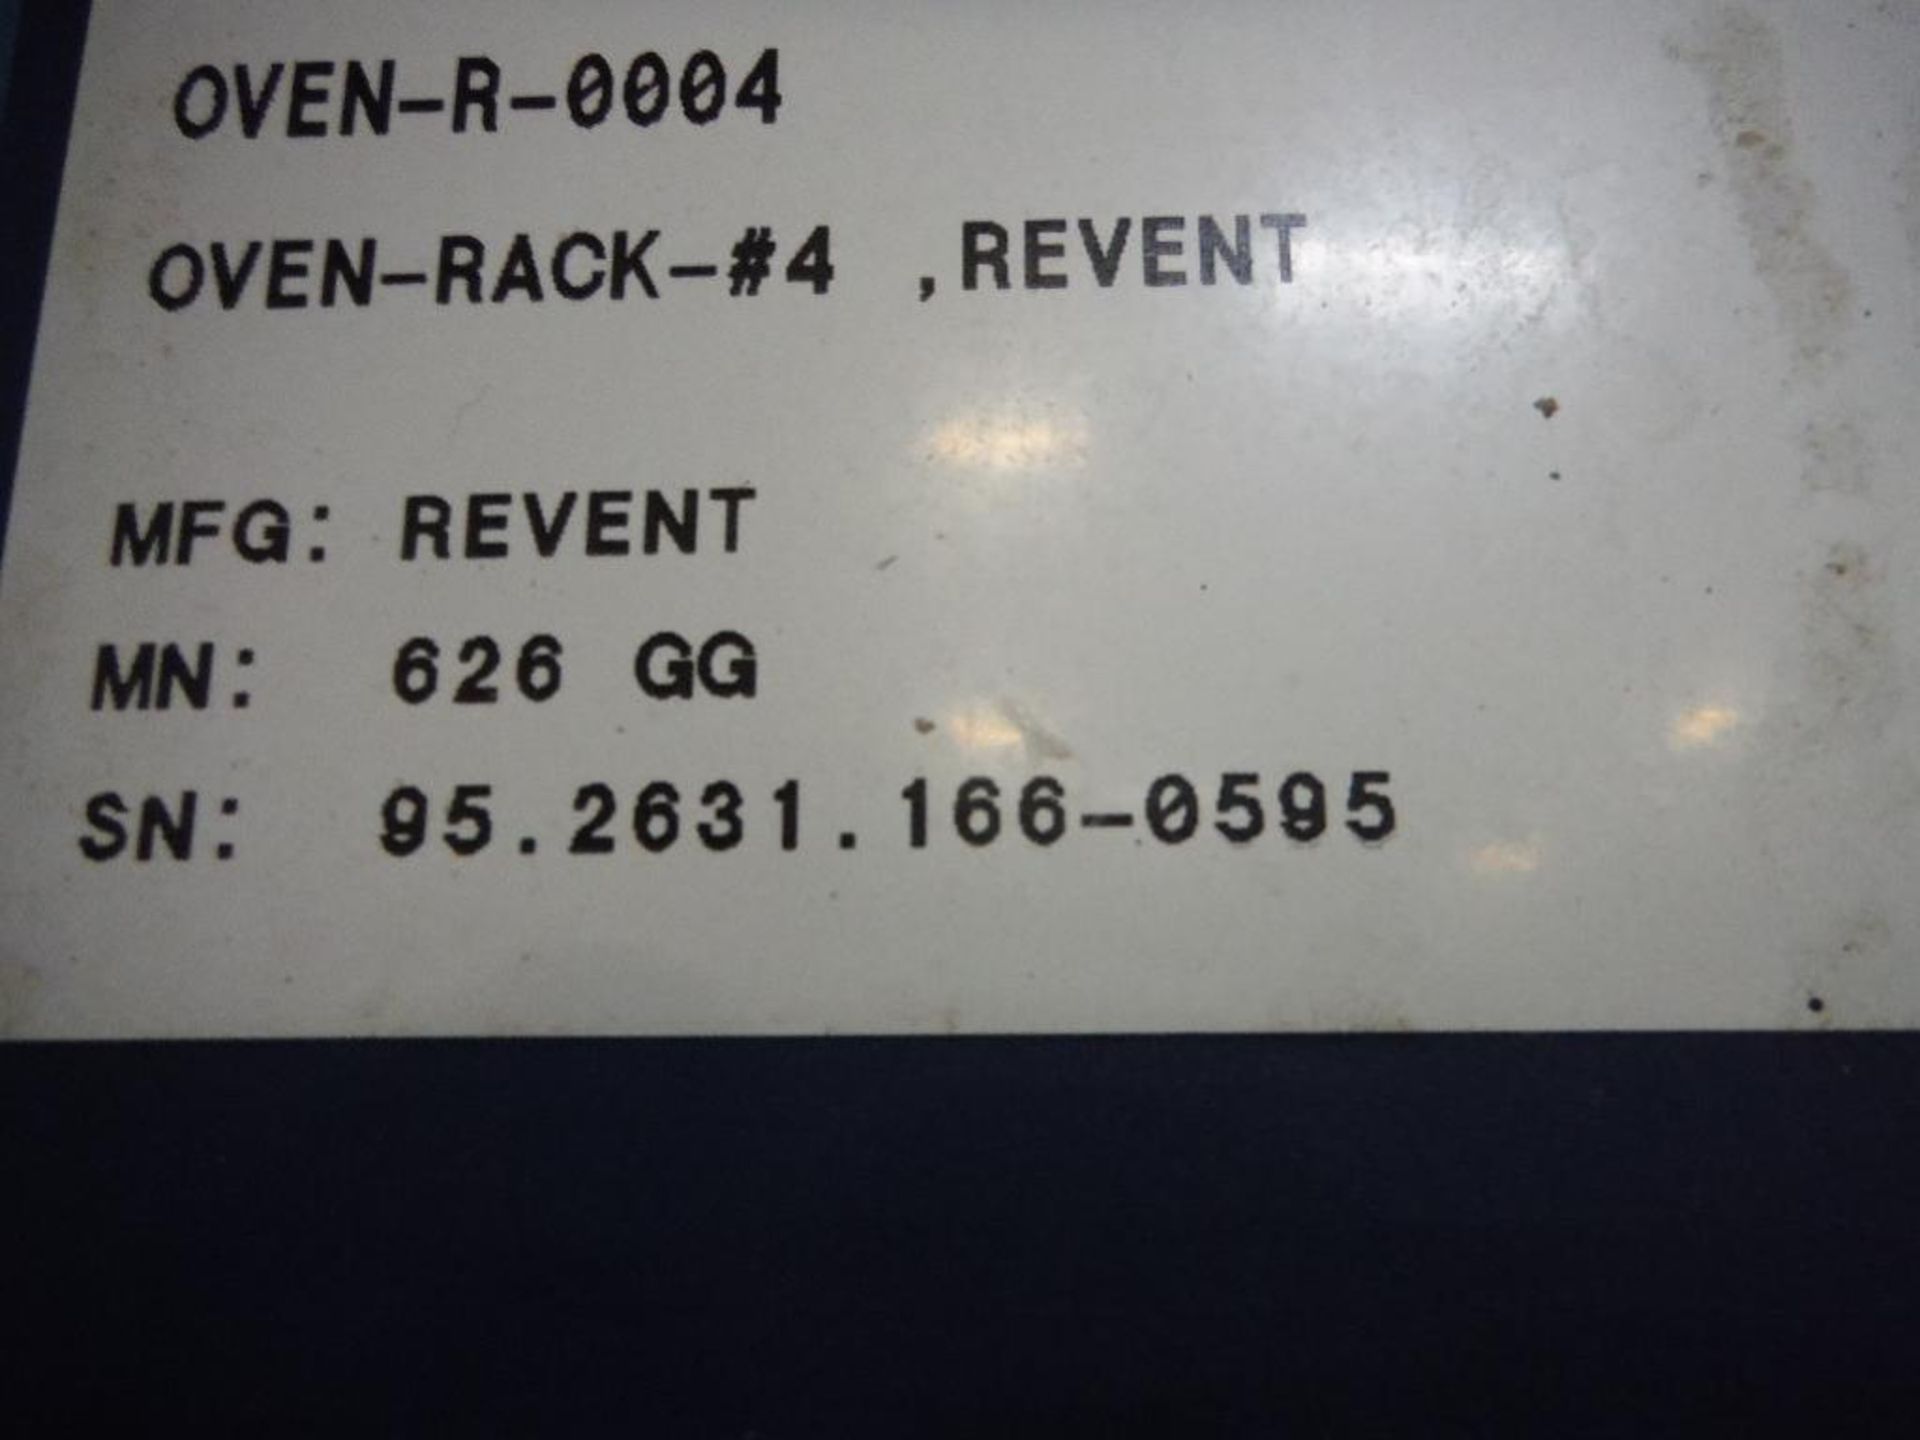 1995 Revent double rack oven, Model 626GG, SN 95.2631.166-0595, ** Rigging Fee: $200 ** - Image 7 of 7